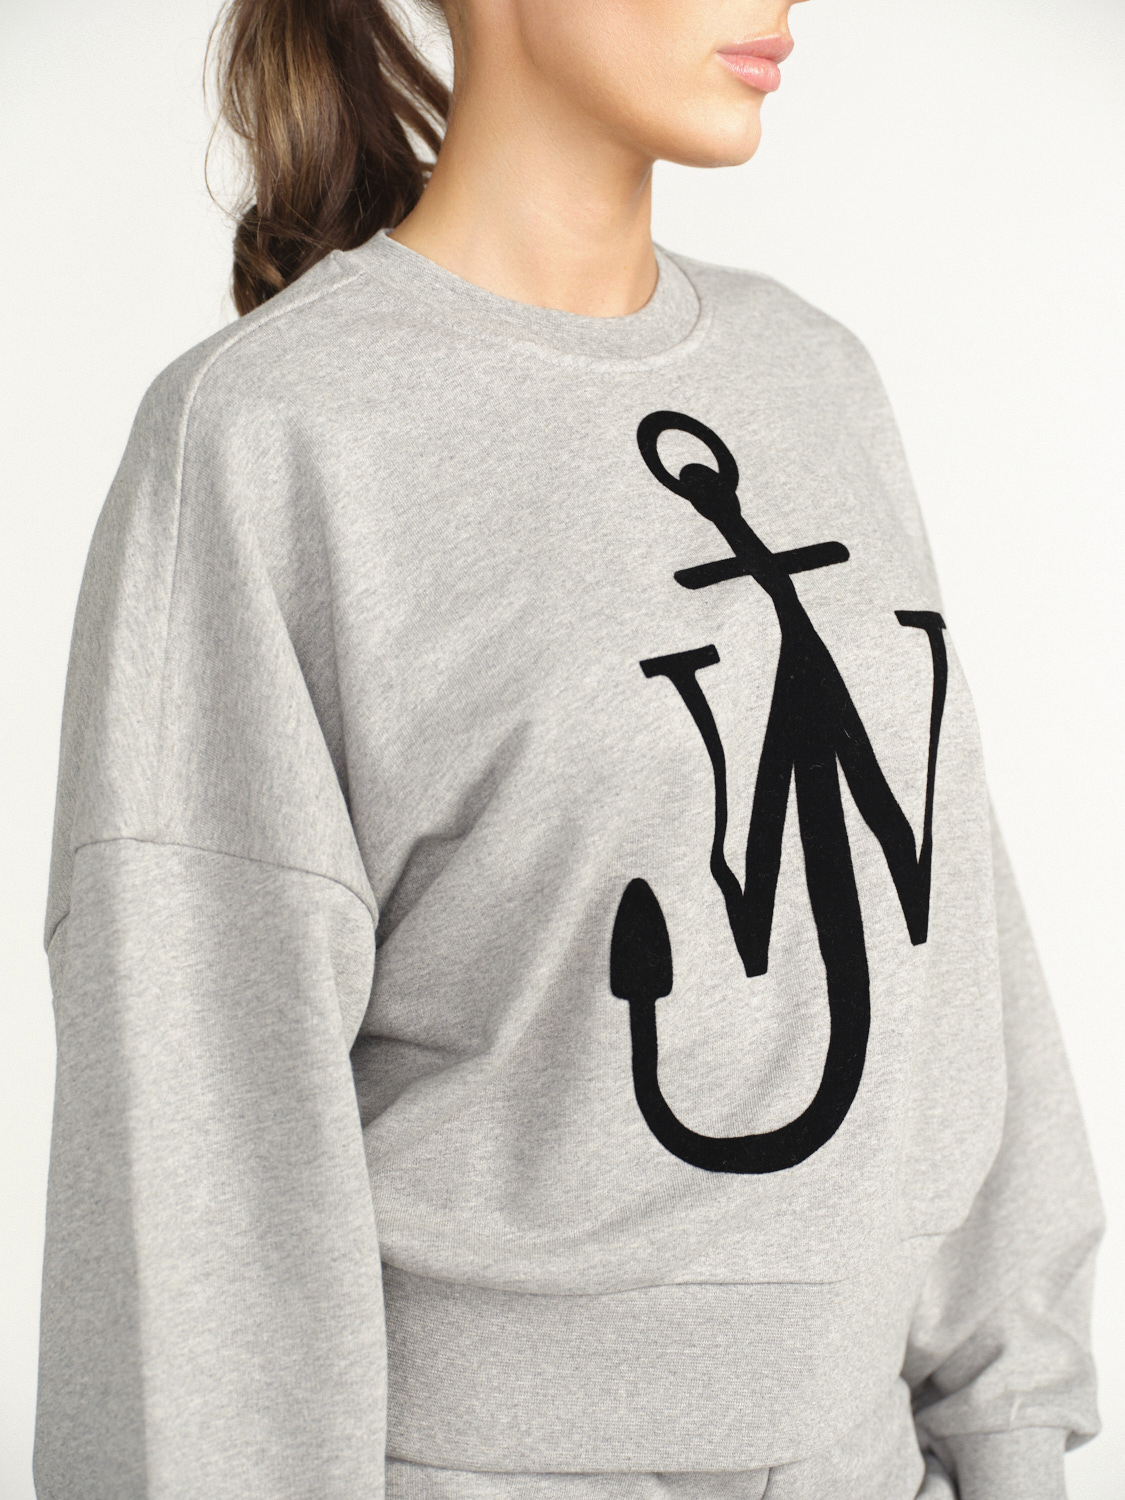 JW Anderson Anchor Sweatshirt – Pullover mit Logodesign grau L